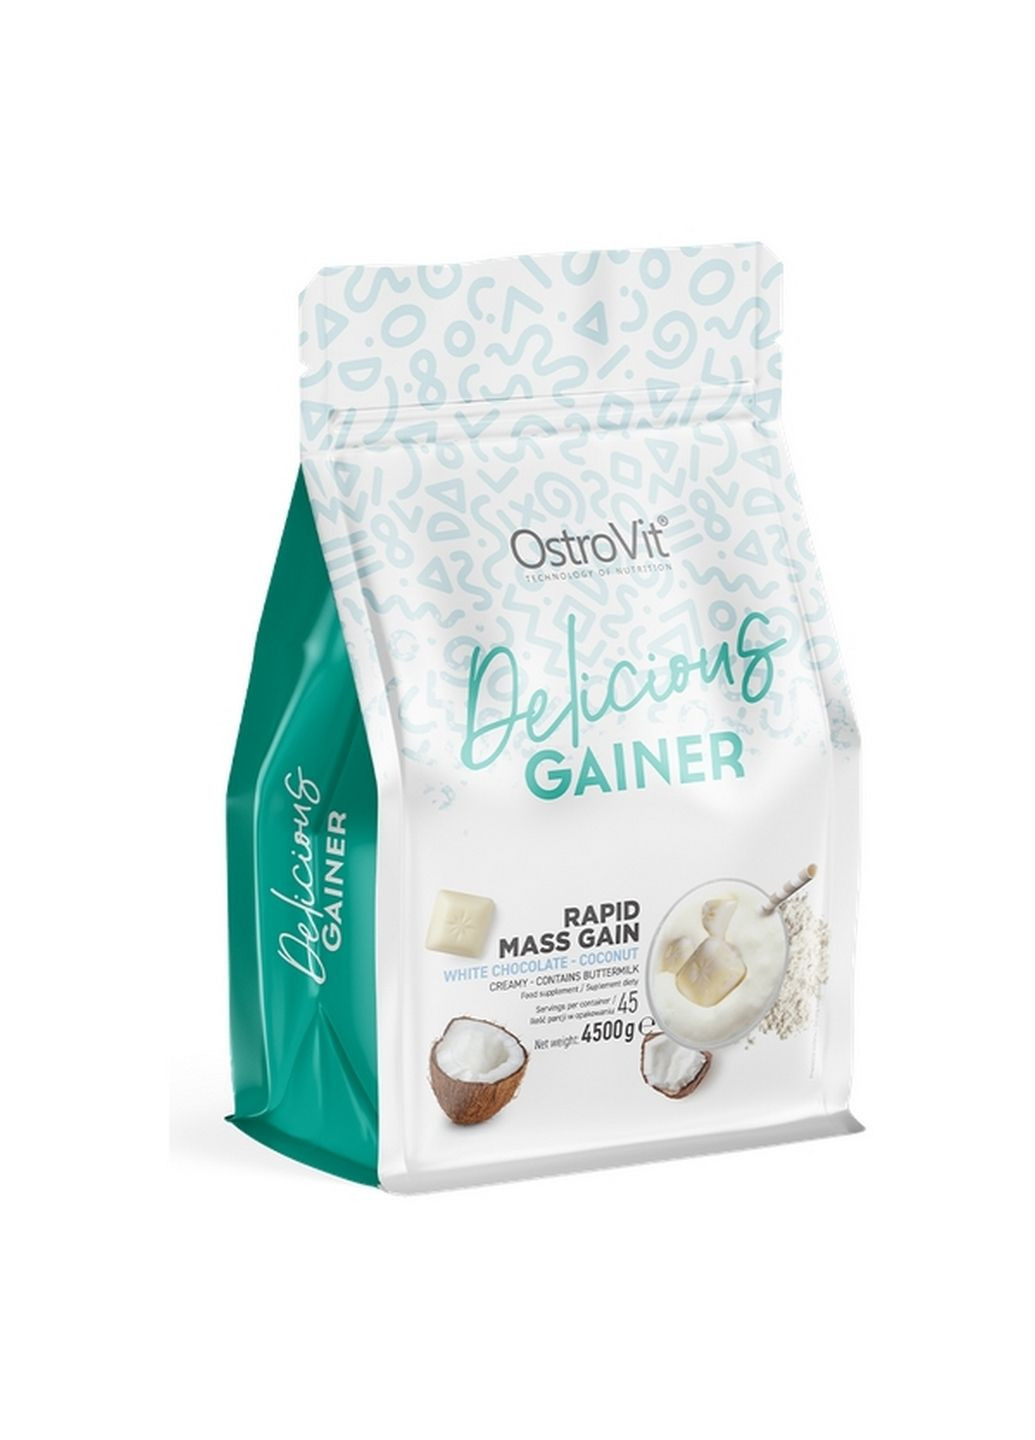 Гейнер Delicious Gainer, 4.5 кг Белый шоколад-кокос Ostrovit (293481176)